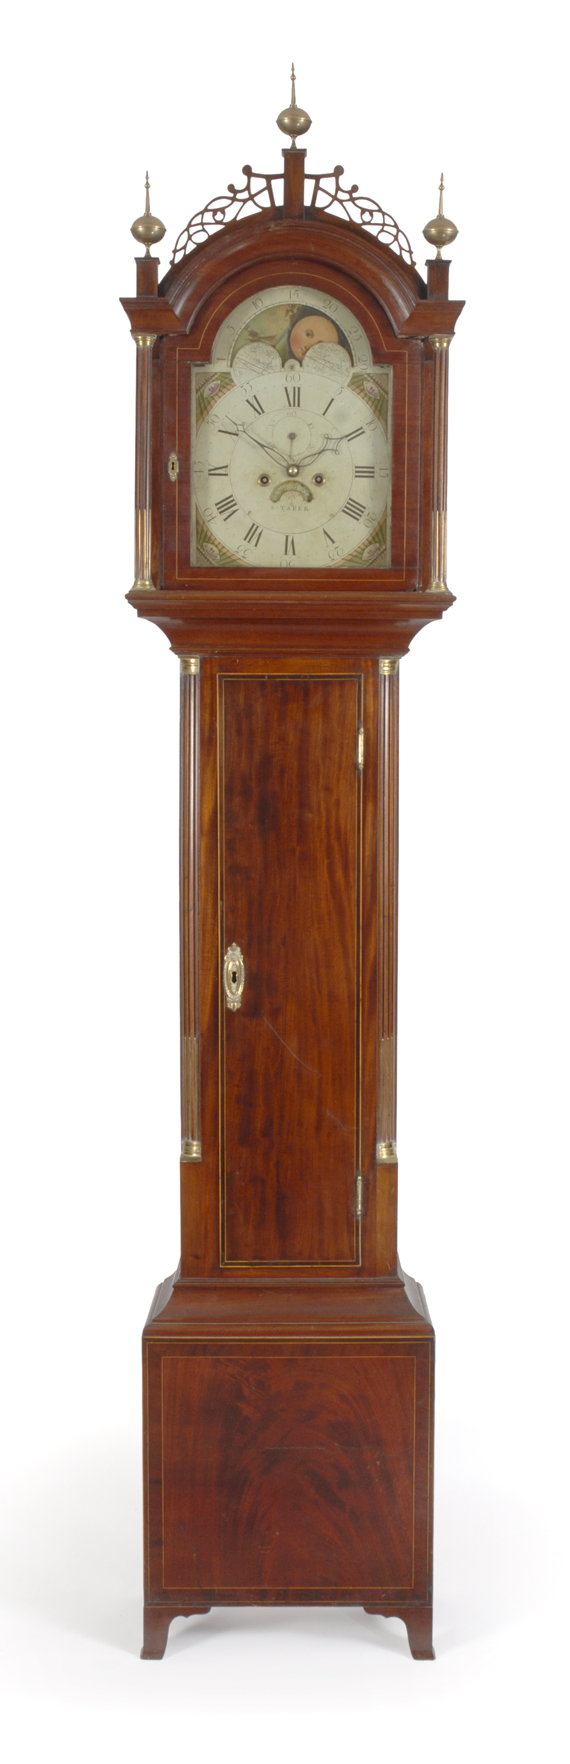 A fine Hepplewhite tall case clock by rare maker Stephen Taber, New Bedford circa 1810.